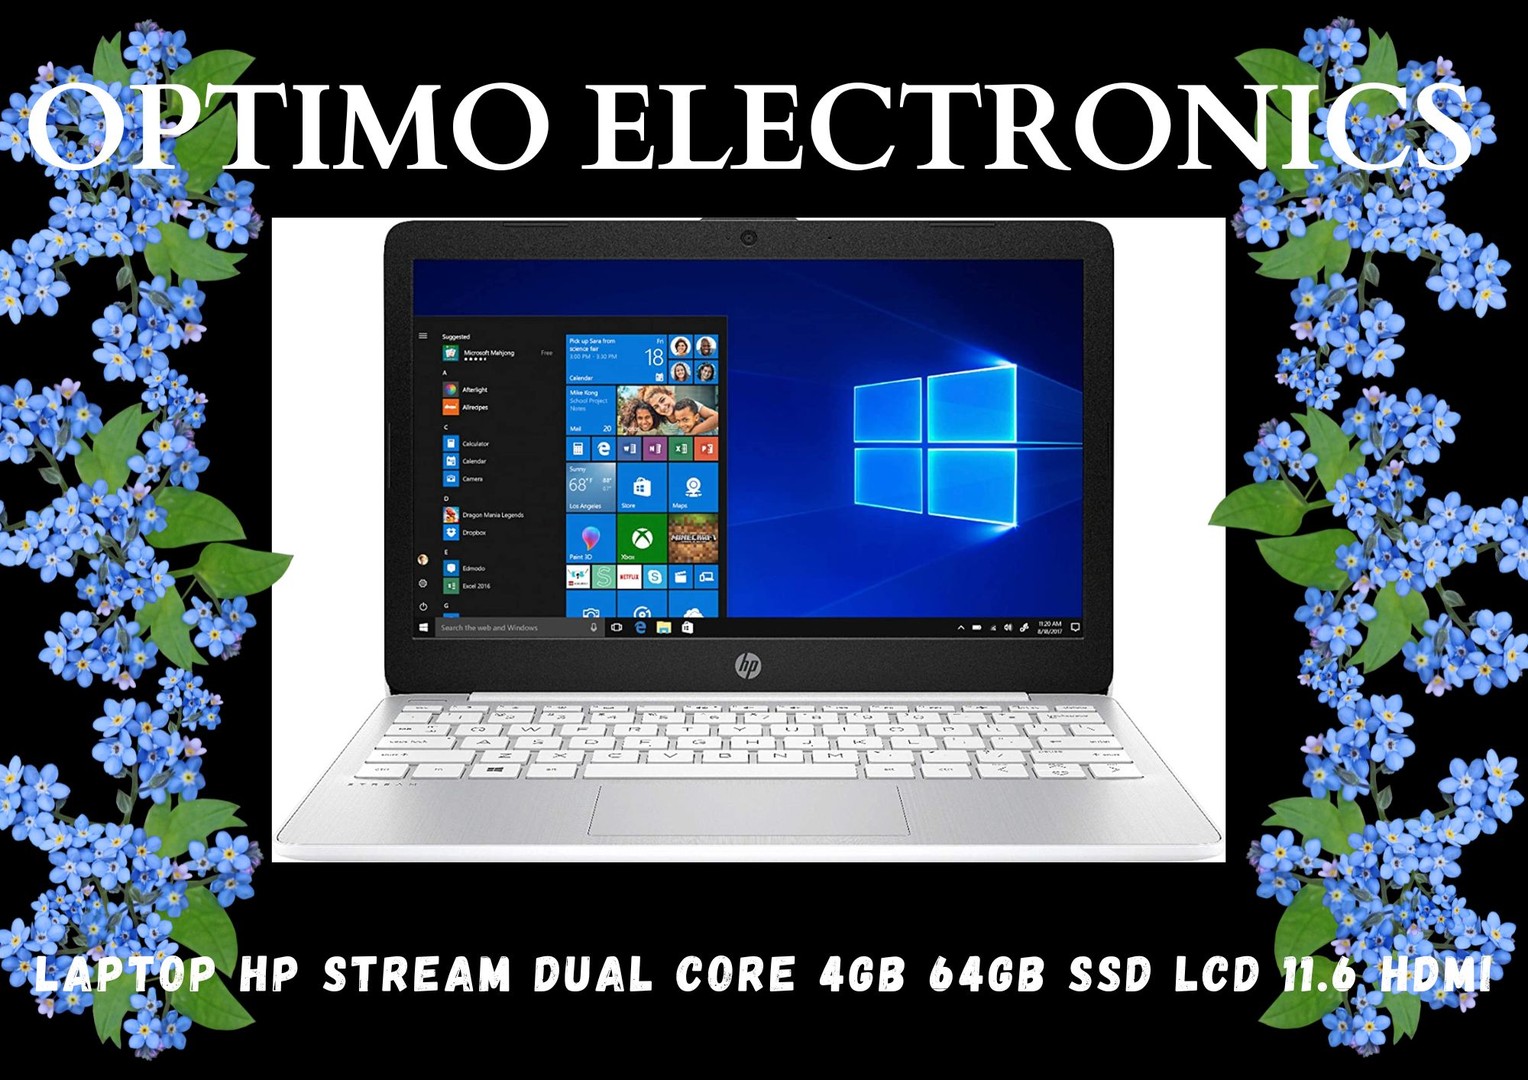 computadoras y laptops - LAPTOP HP STREAM DUAL CORE 4GB 64GB SSD LCD 11.6 HDMI 0